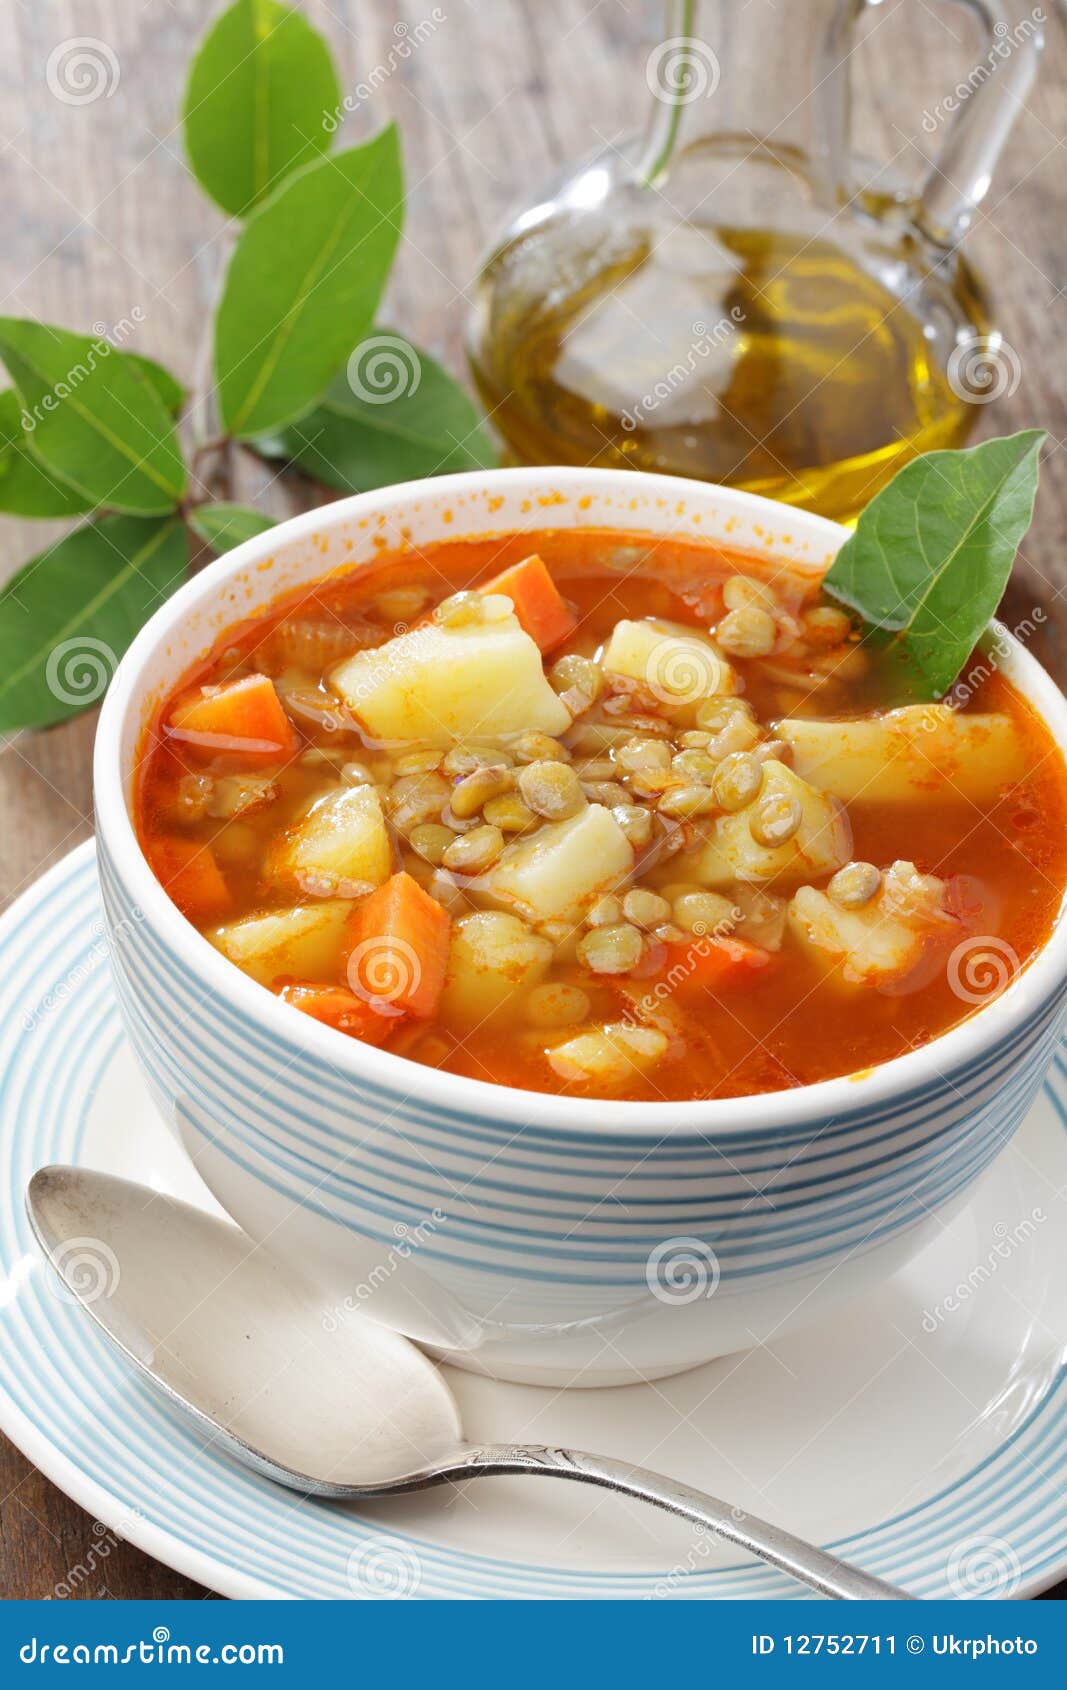 Lentil soup stock image. Image of lentil, spoon, bowl - 12752711